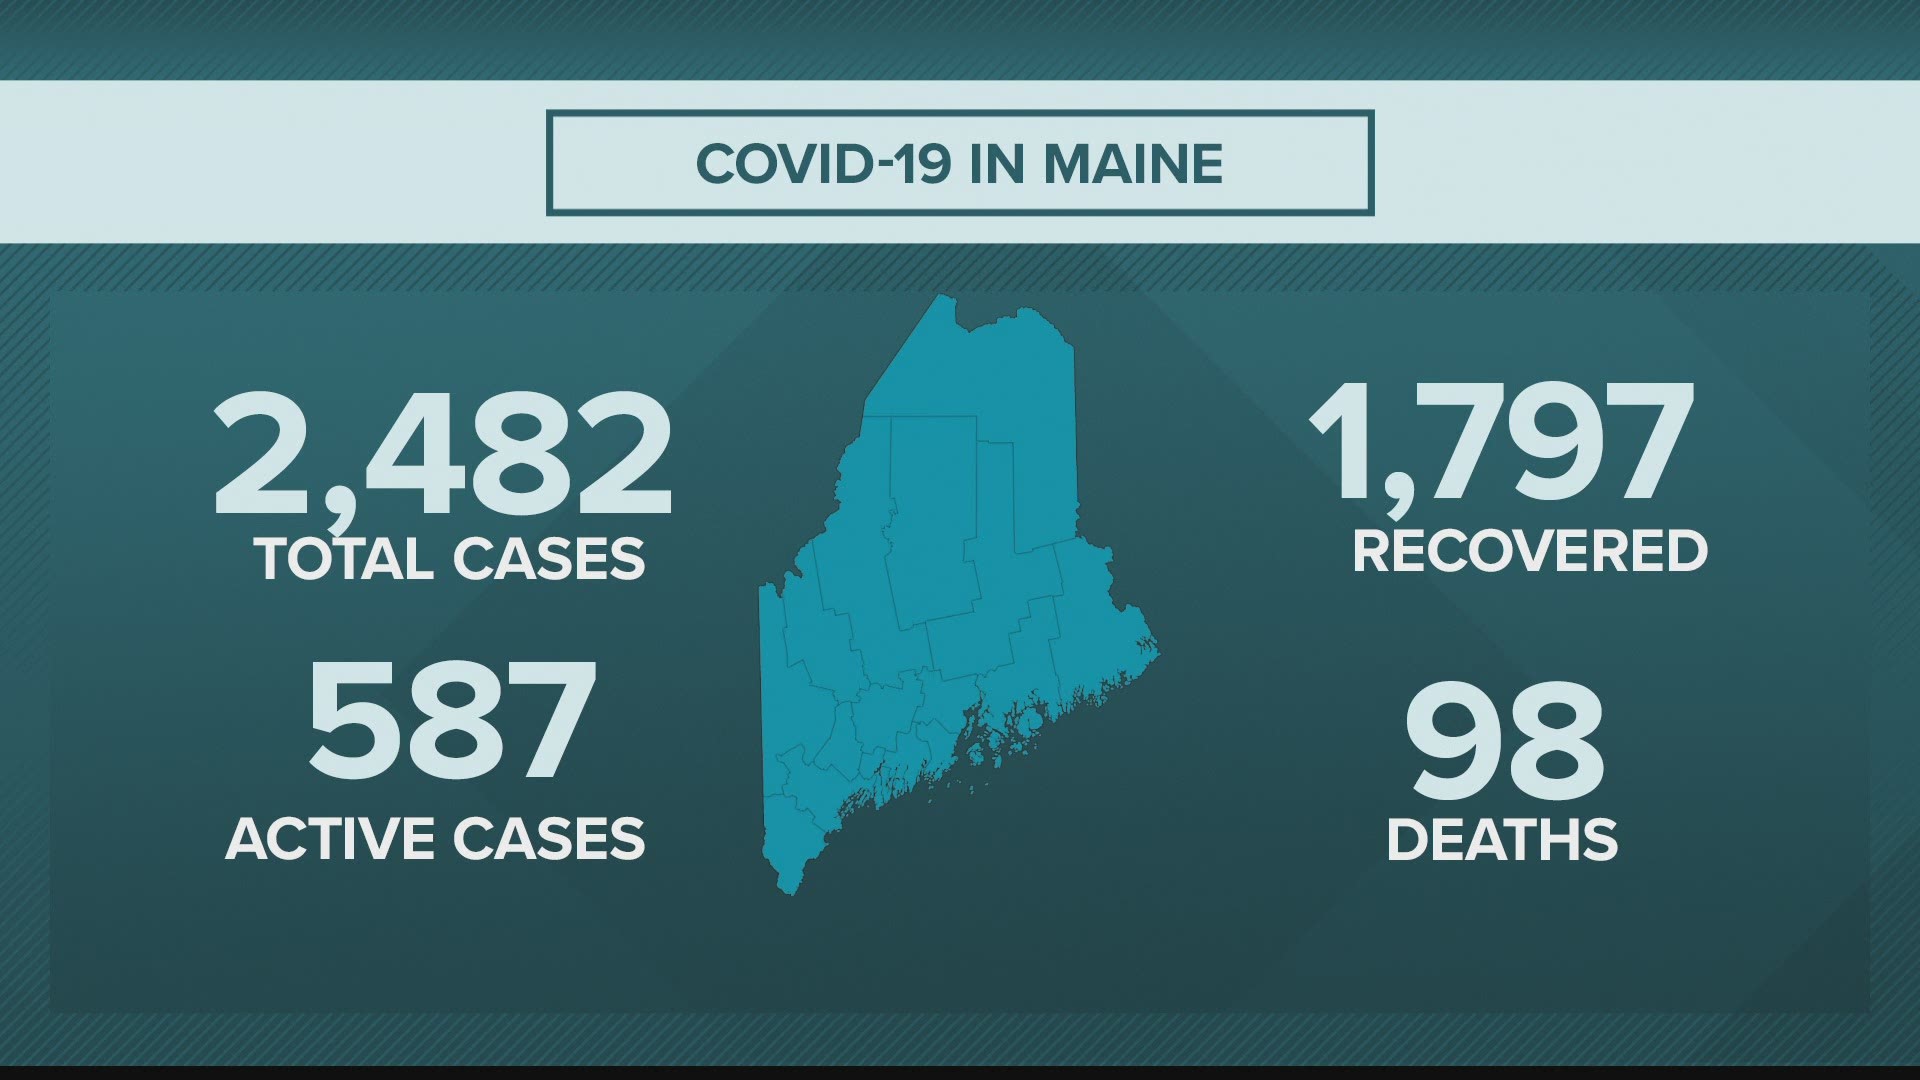 98 deaths, 2,482 total coronavirus, COVID-19 cases in Maine.